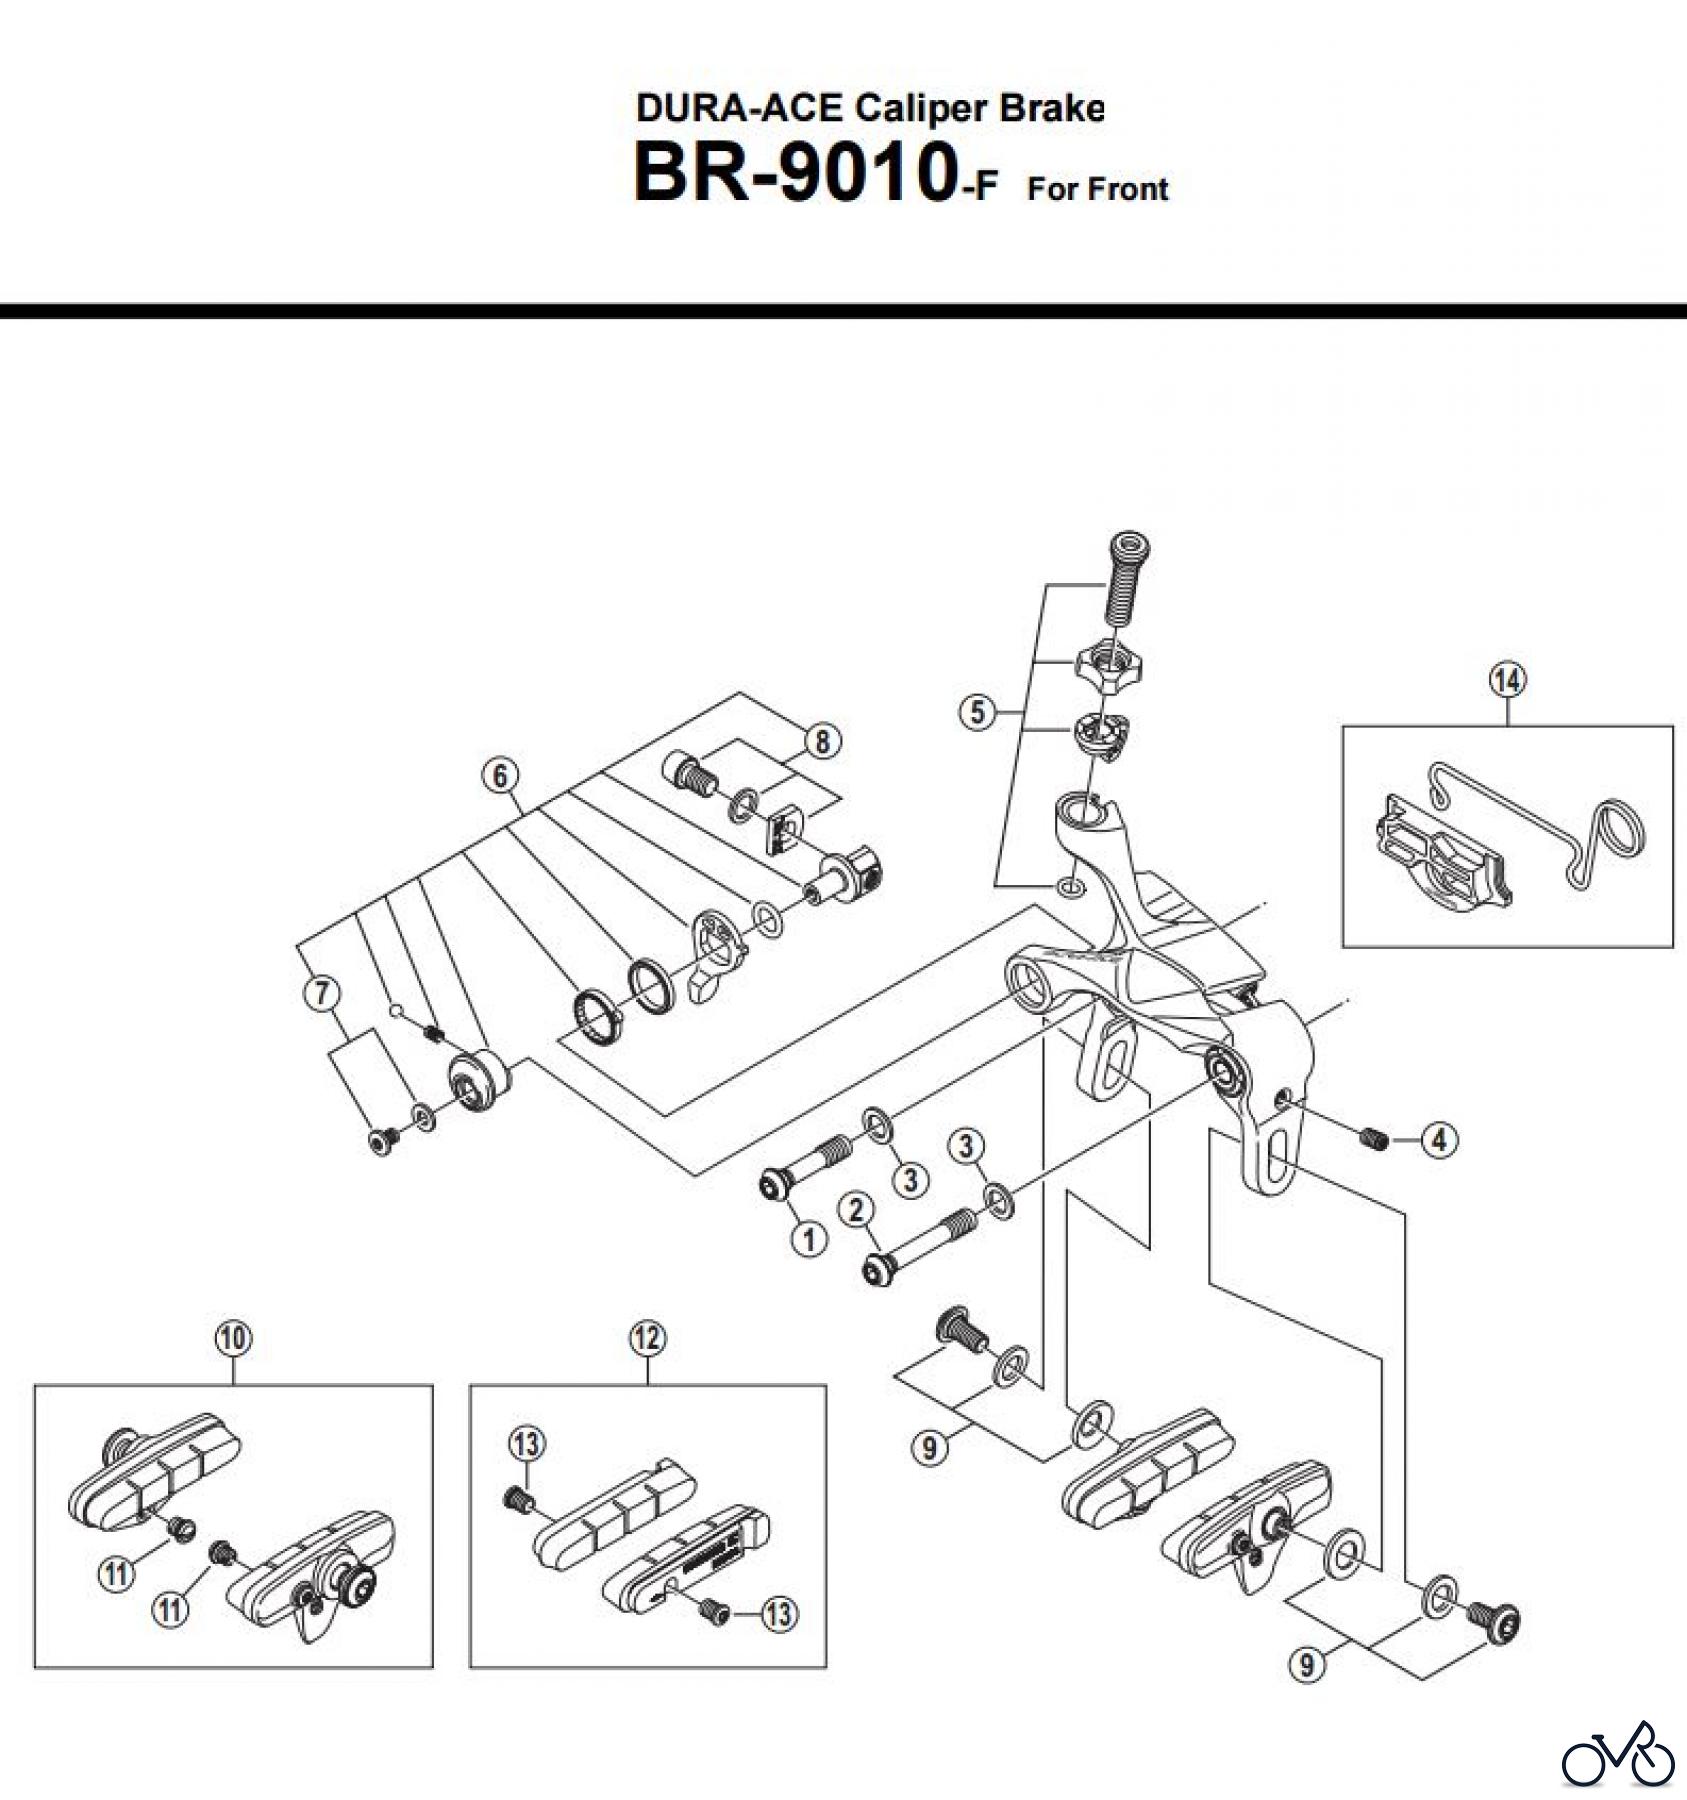  Shimano BR Brake - Bremse BR-9010-F -3461A DURA-ACE Caliper Brake For Front